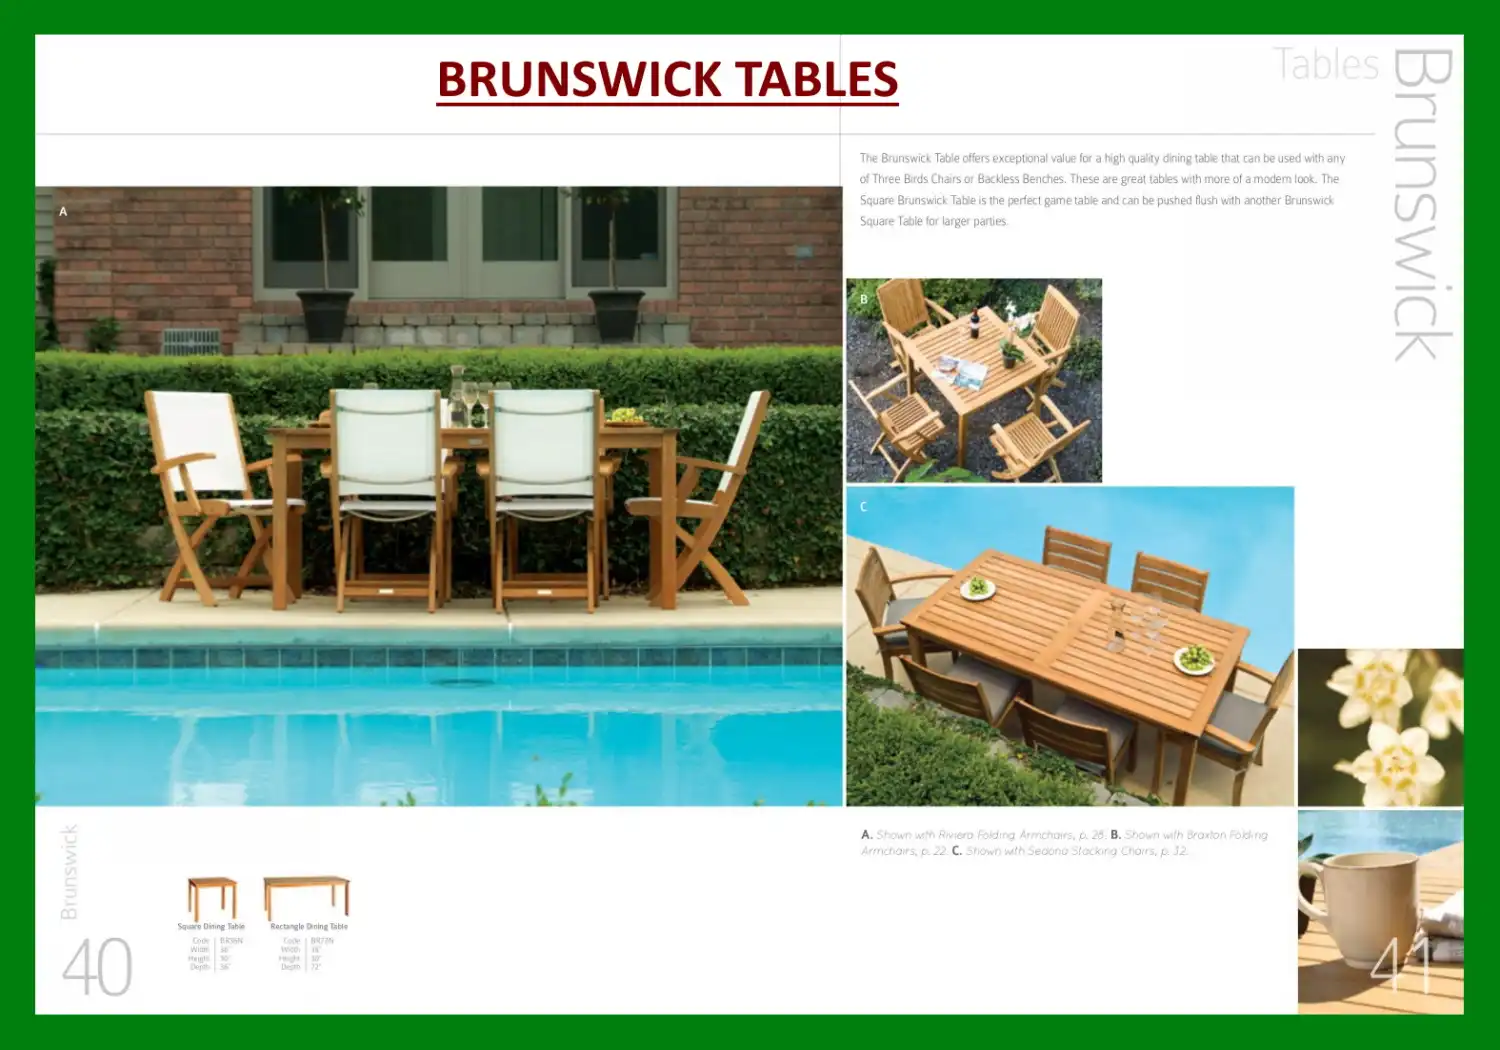 BRUNSWICK TABLES